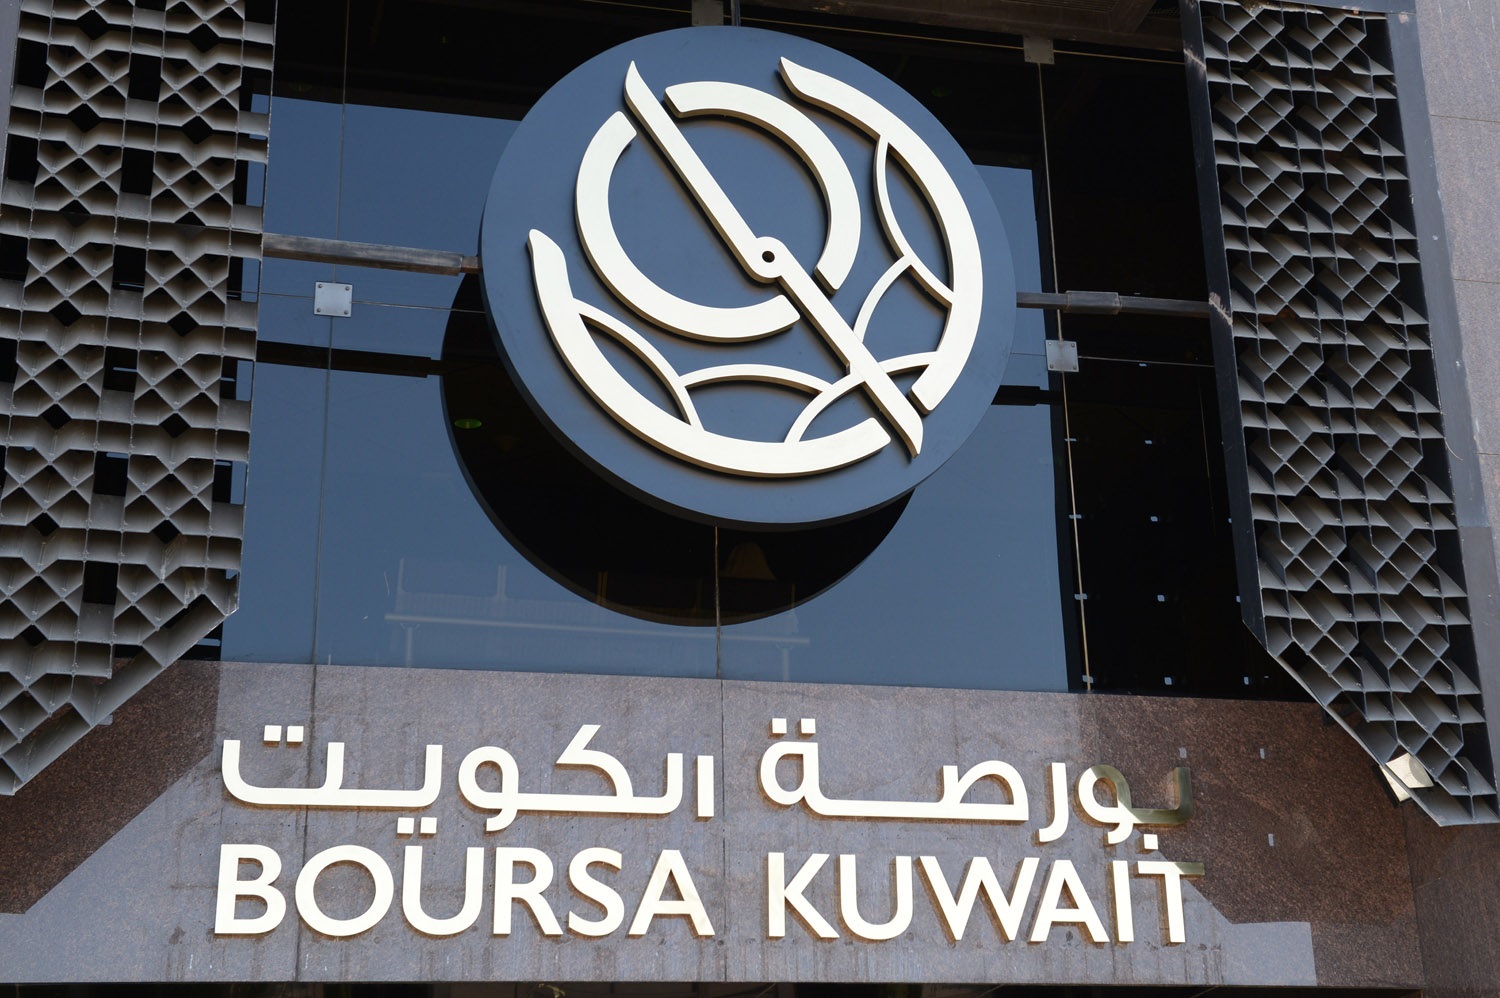 Kuwait bourse bechmark gains 18.9 points                                                                                                                                                                                                                  